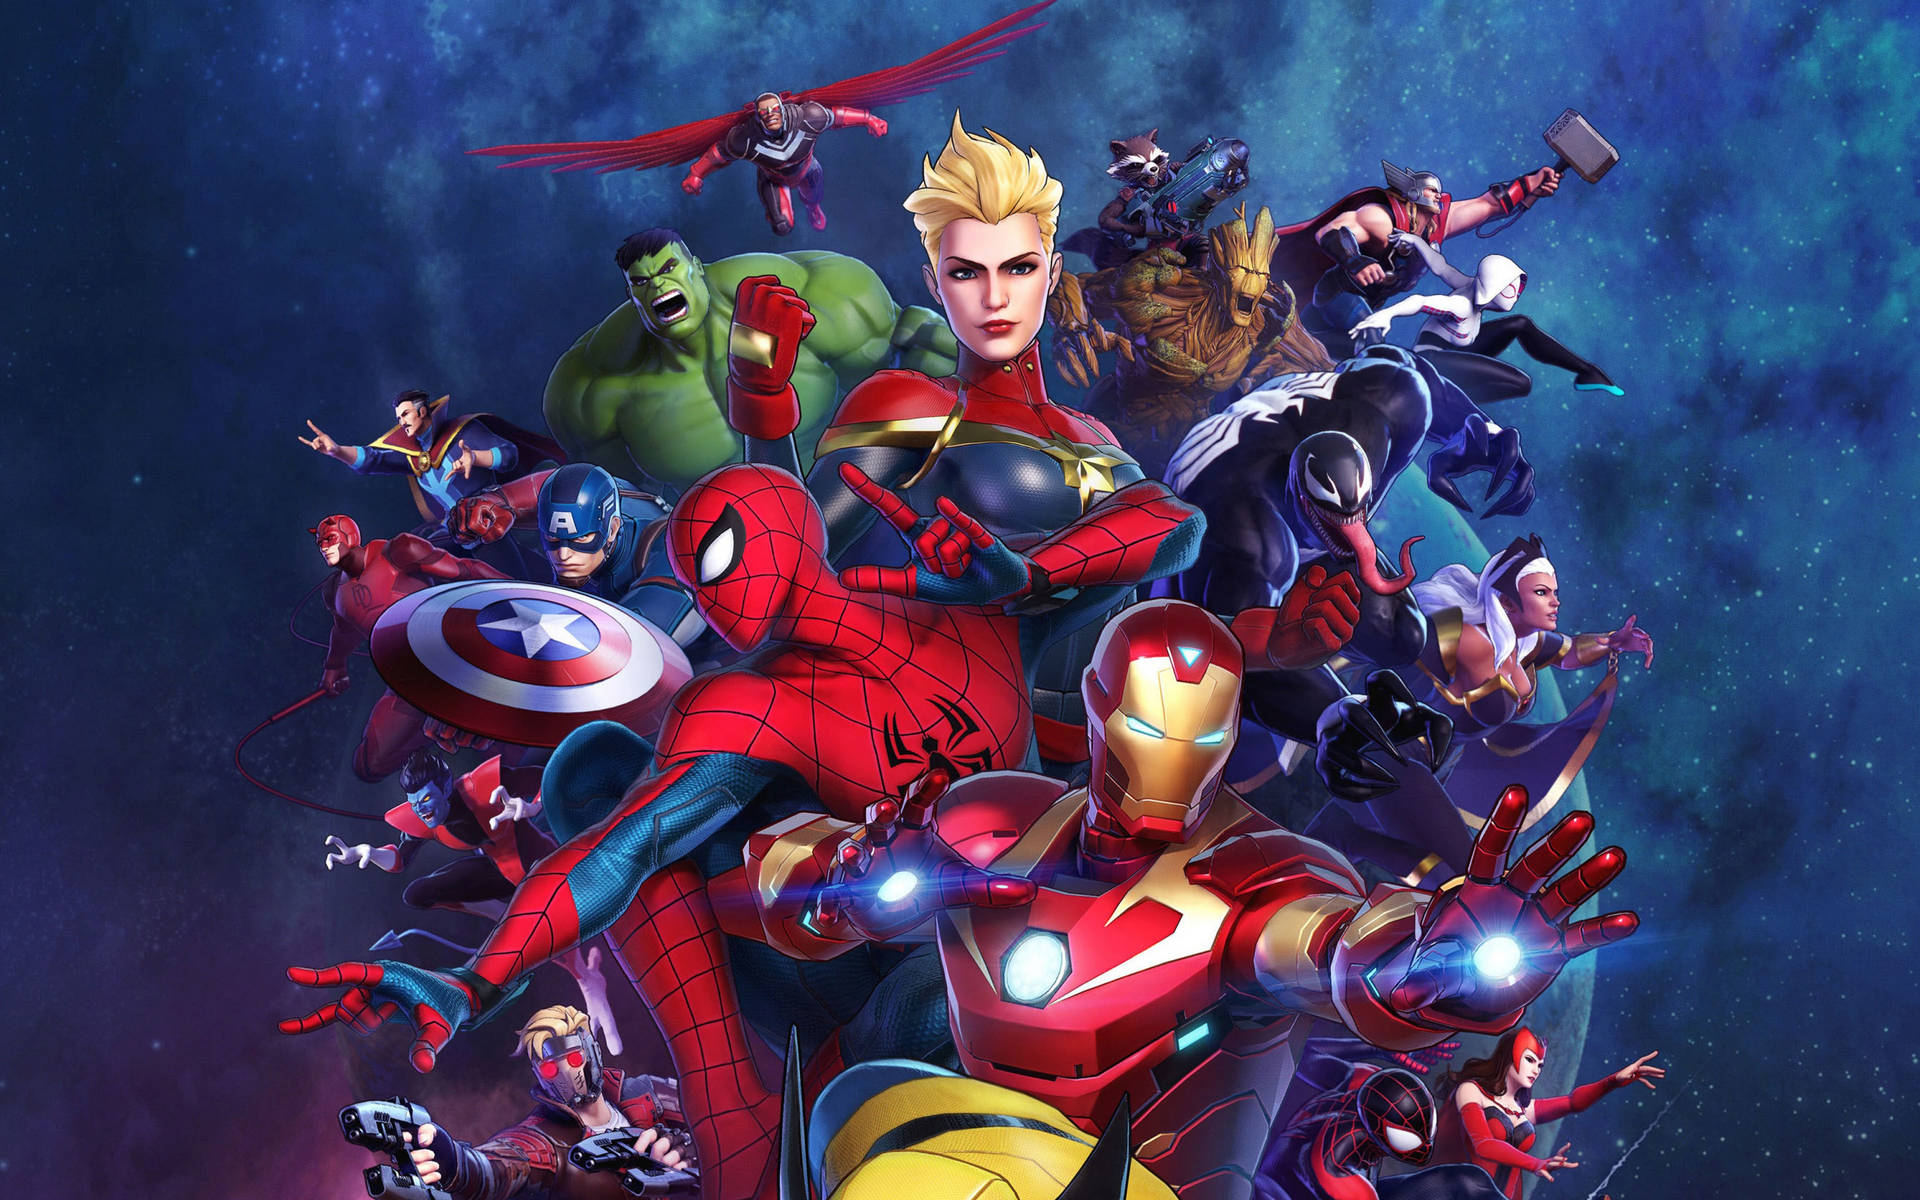 Free Marvel Superheroes Wallpaper Downloads, [1300+] Marvel Superheroes  Wallpapers for FREE 